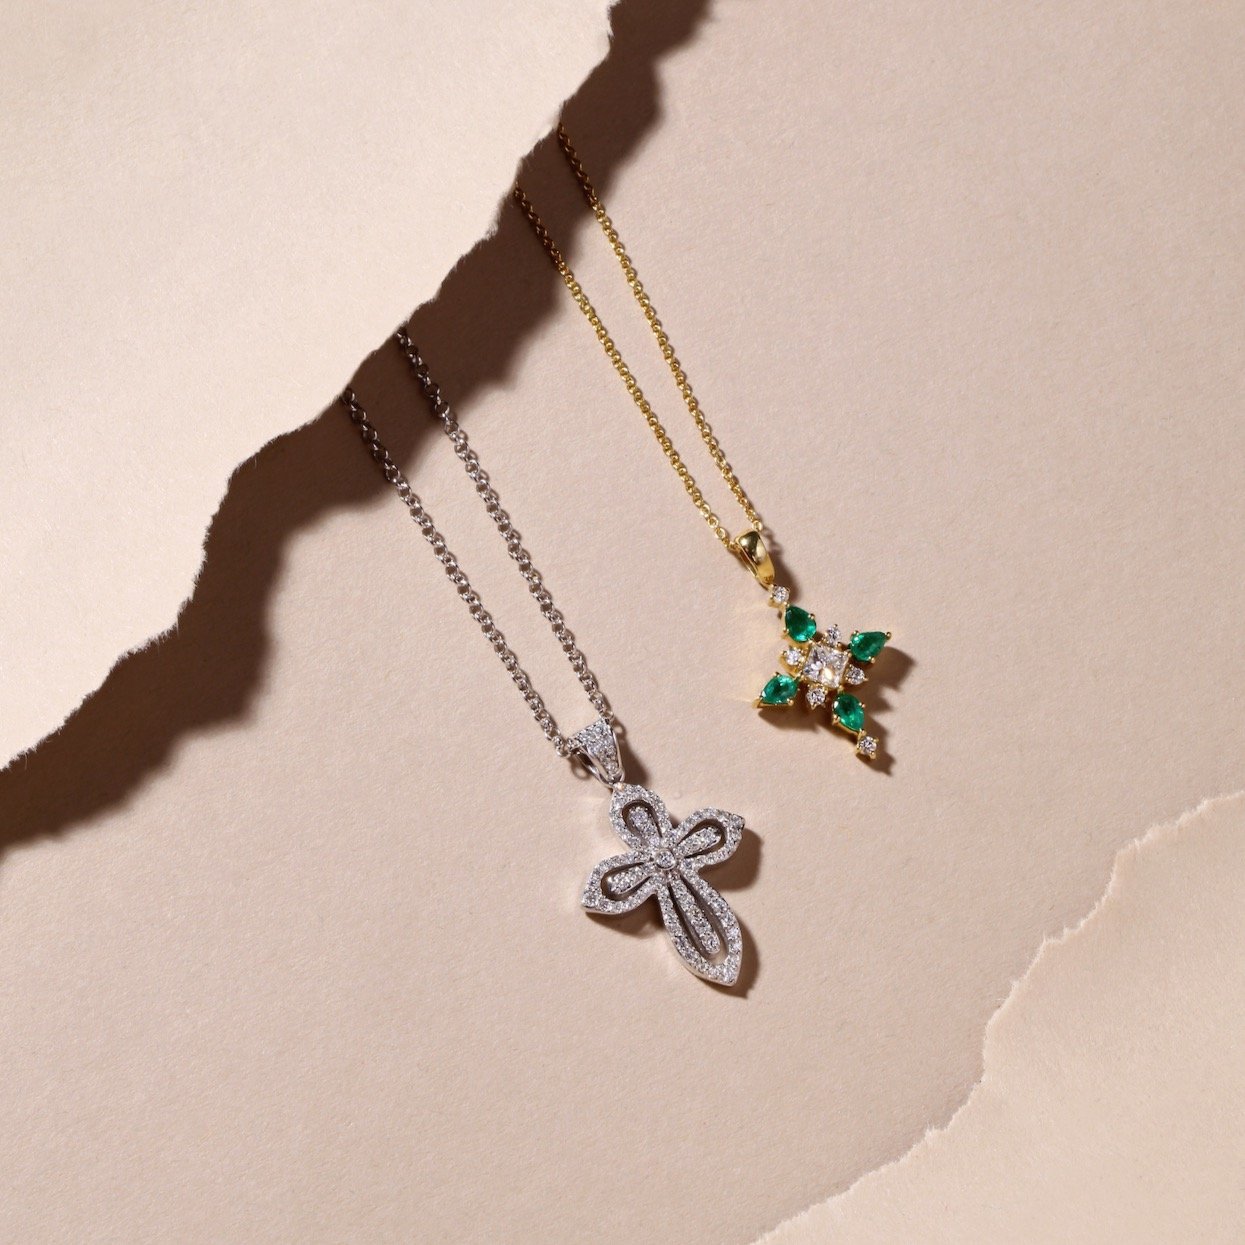 Diamond Cross Necklace | Buy necklace online | Buy Jewelry online